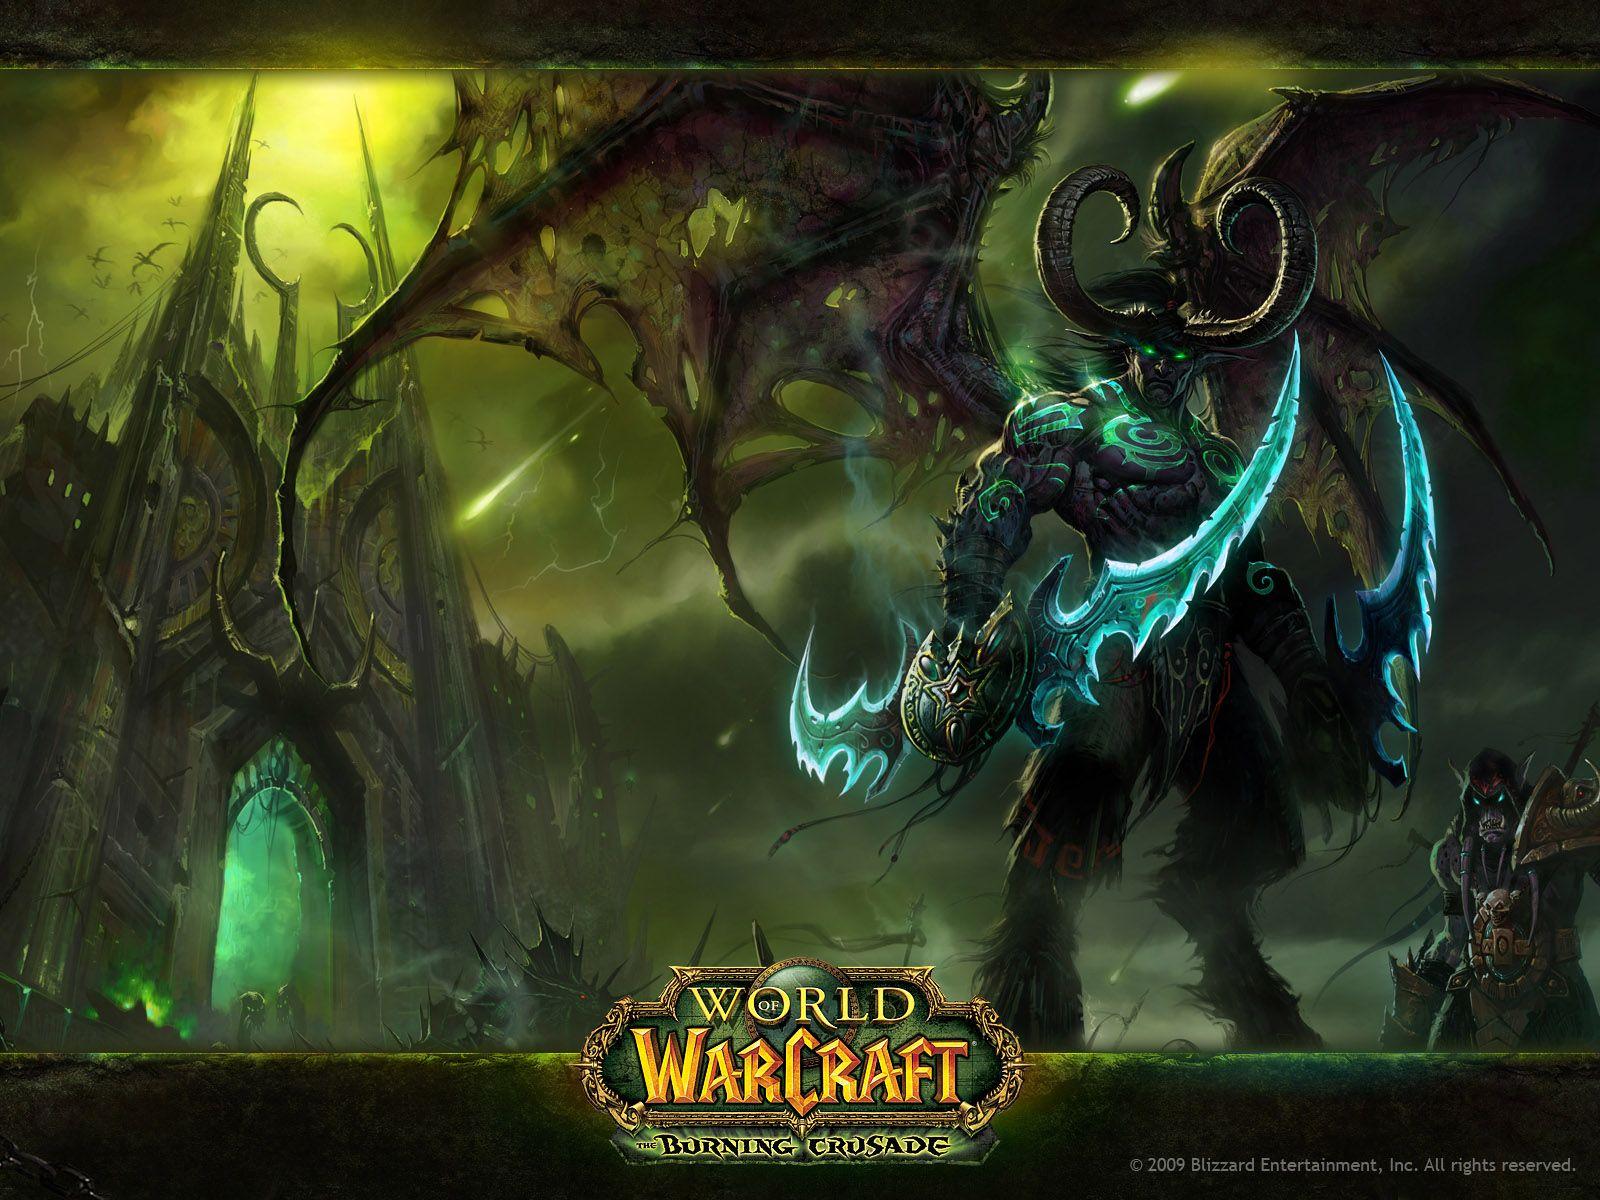 World of Warcraft wallpaper in HD